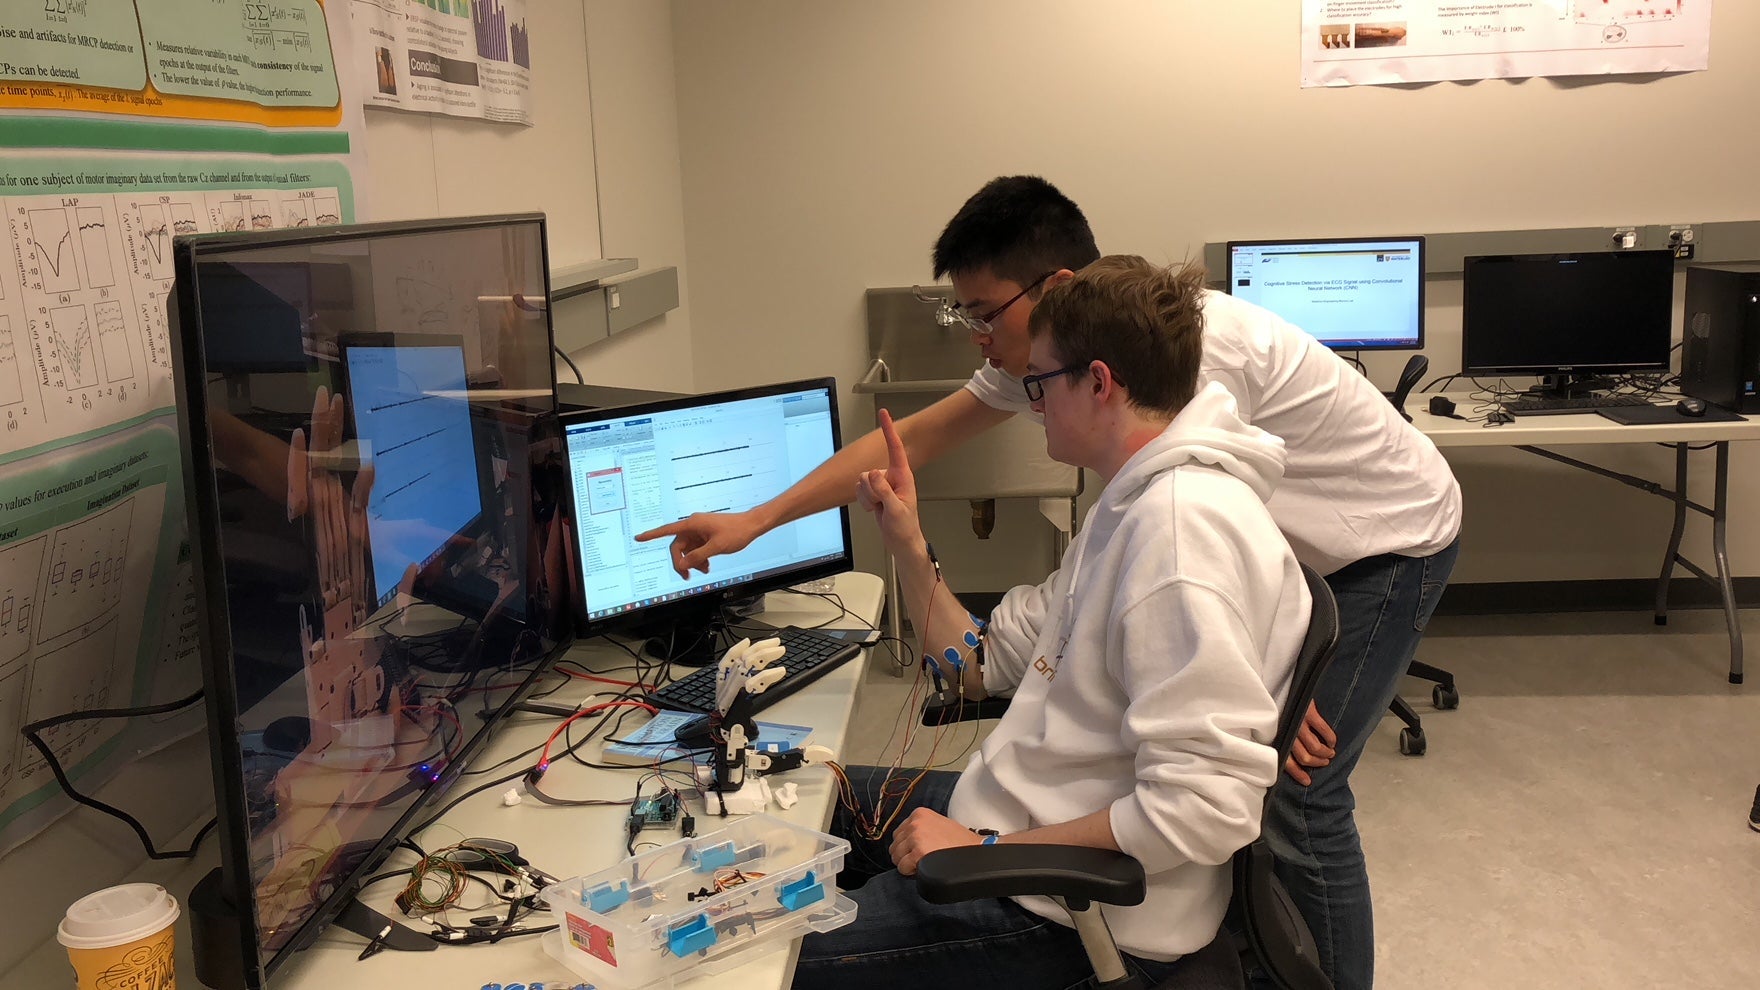 Eric and Jiayuan working on prosthetic hand